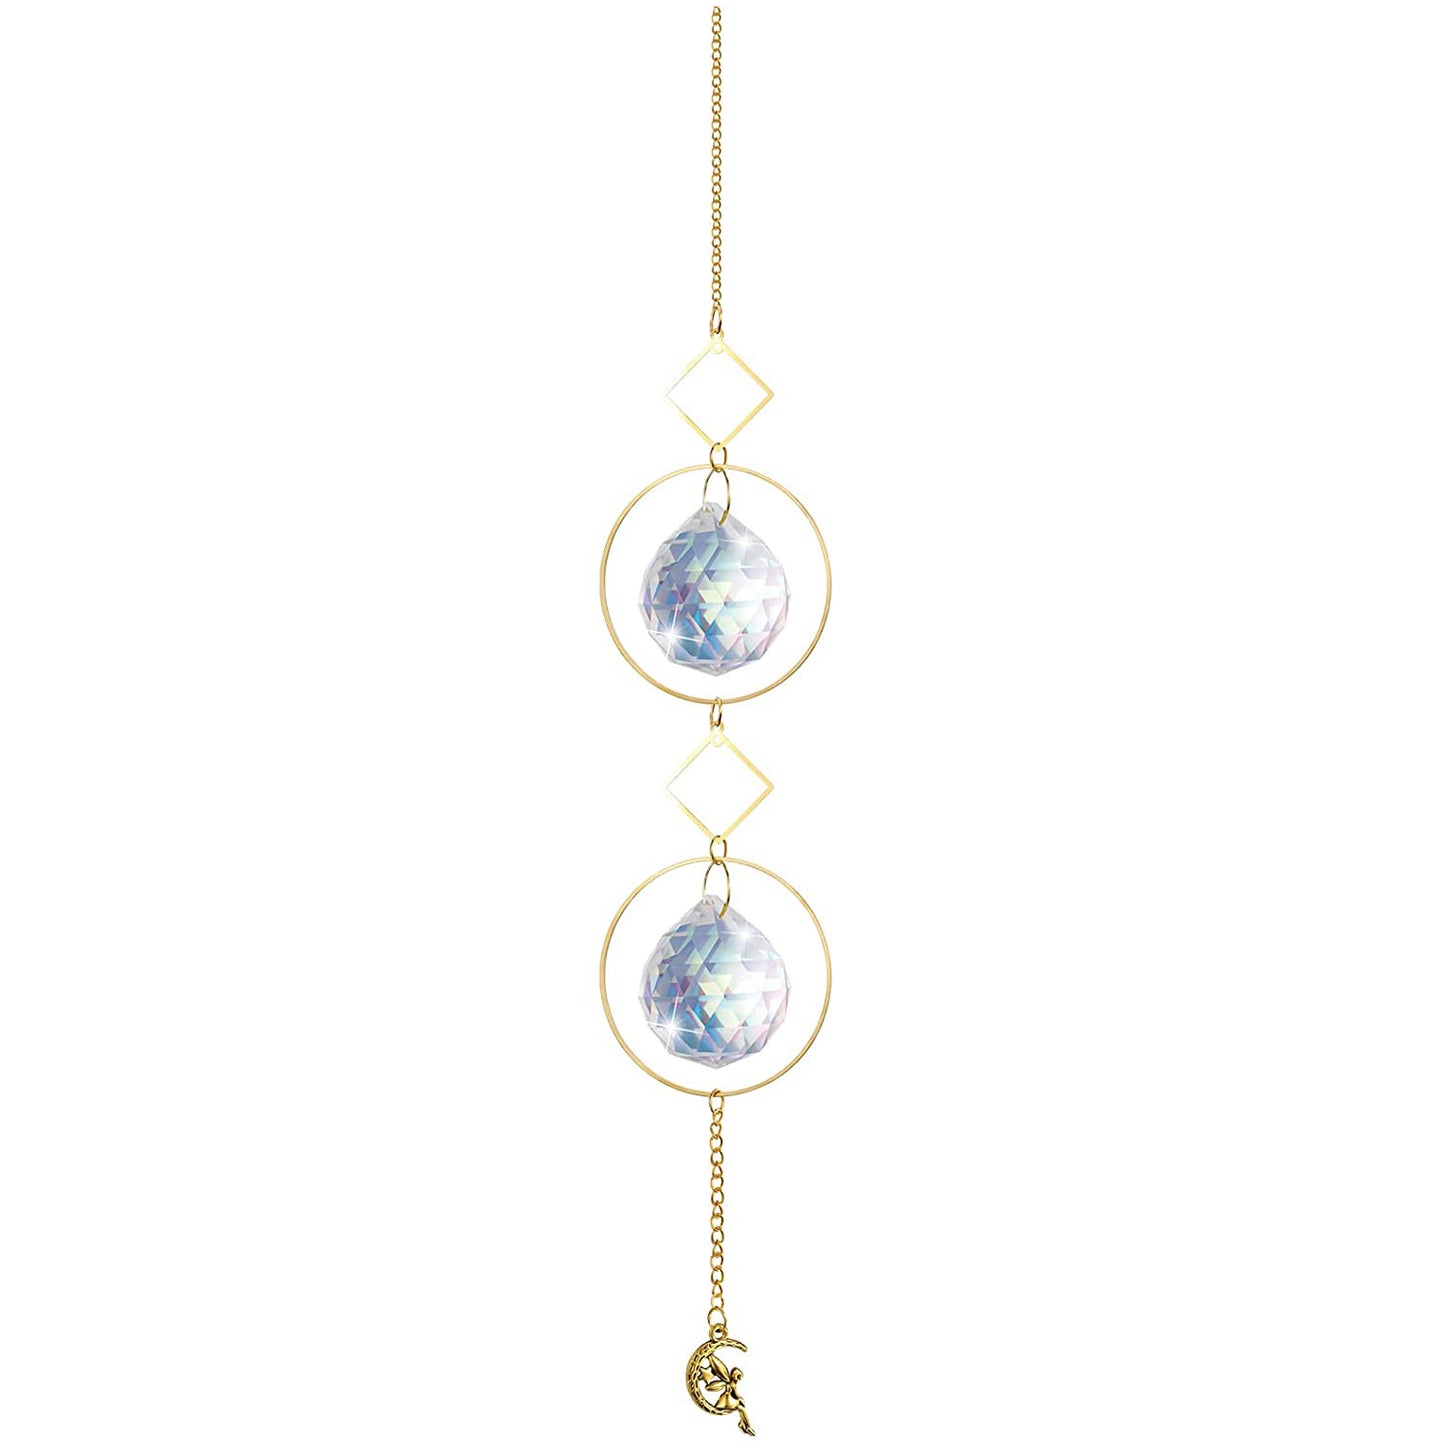 K9 Aura Crystal Hanger Suncatcher 2 Moons Brass Color Twinkle Hanger - Long inch - China - NEW911